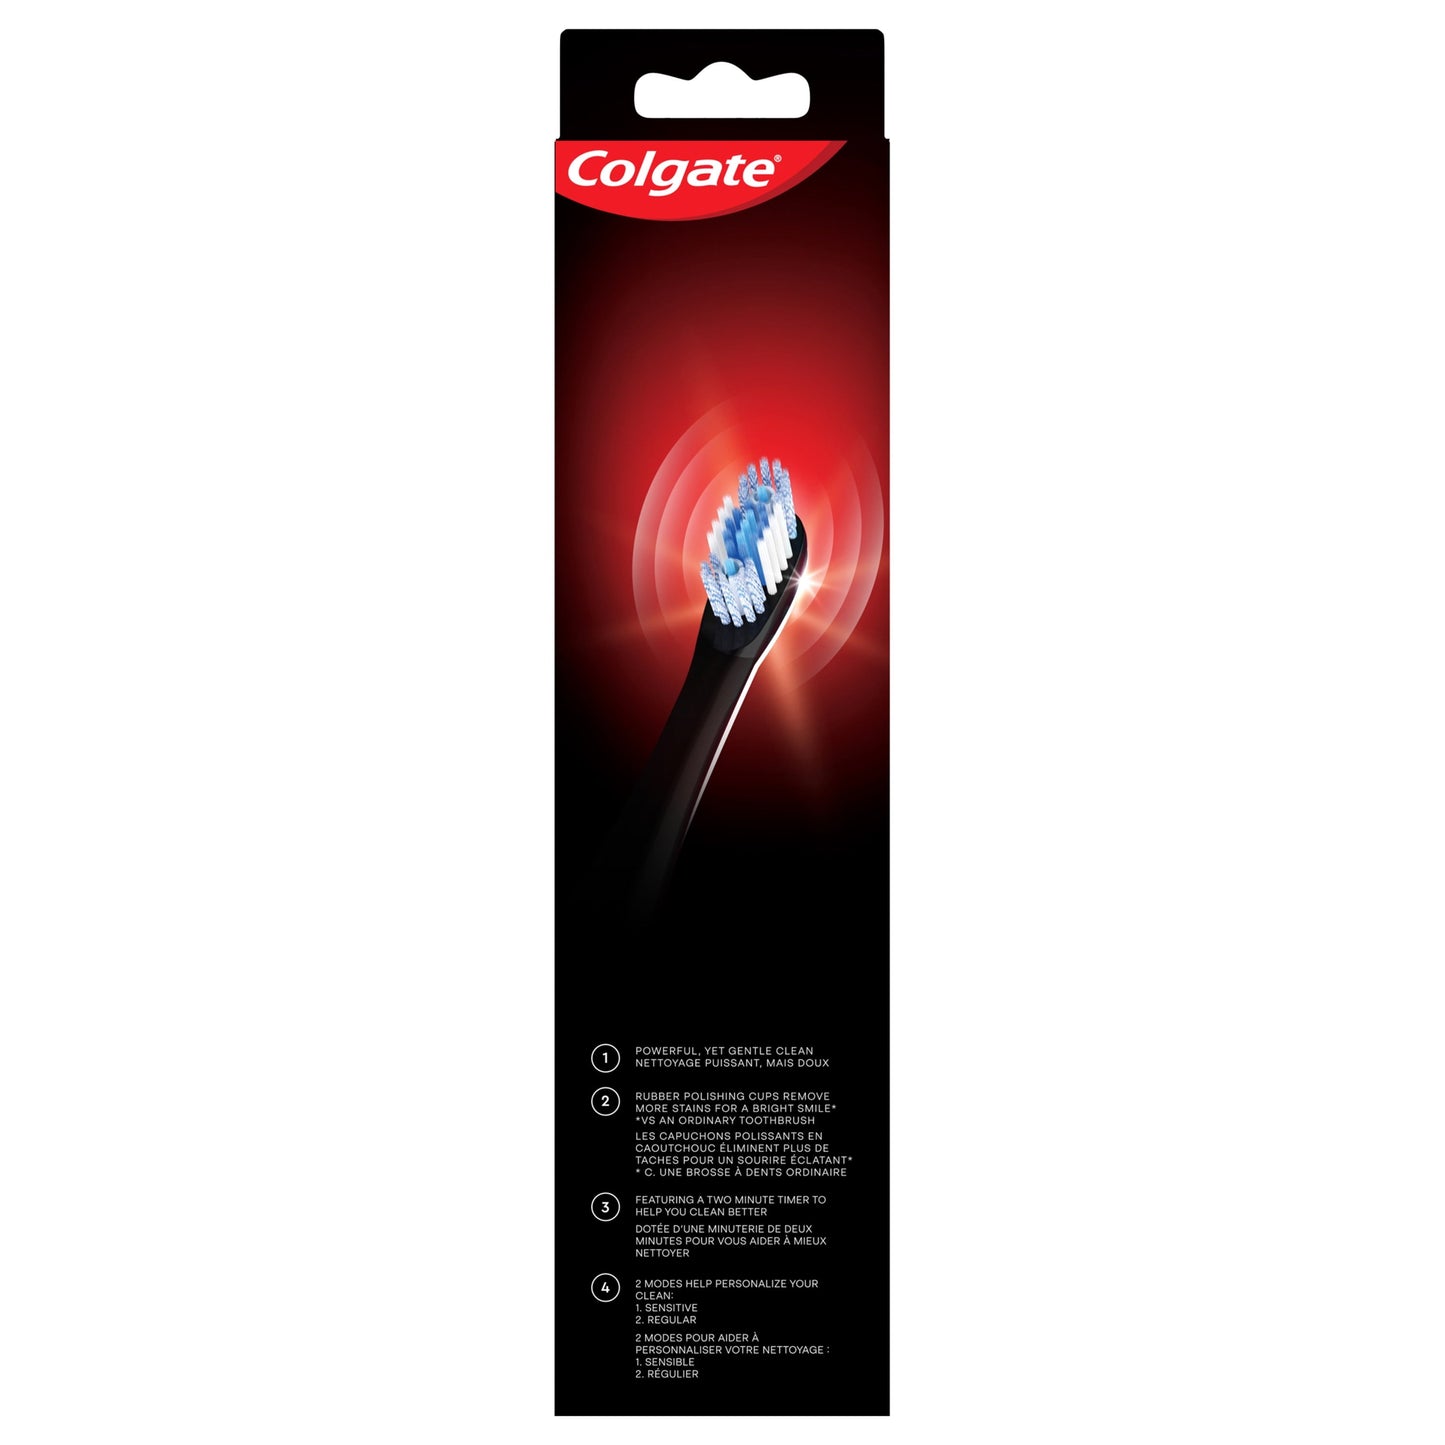 Colgate Optic White Pro Series Sonic Battery Powered Toothbrush, Black, Adult